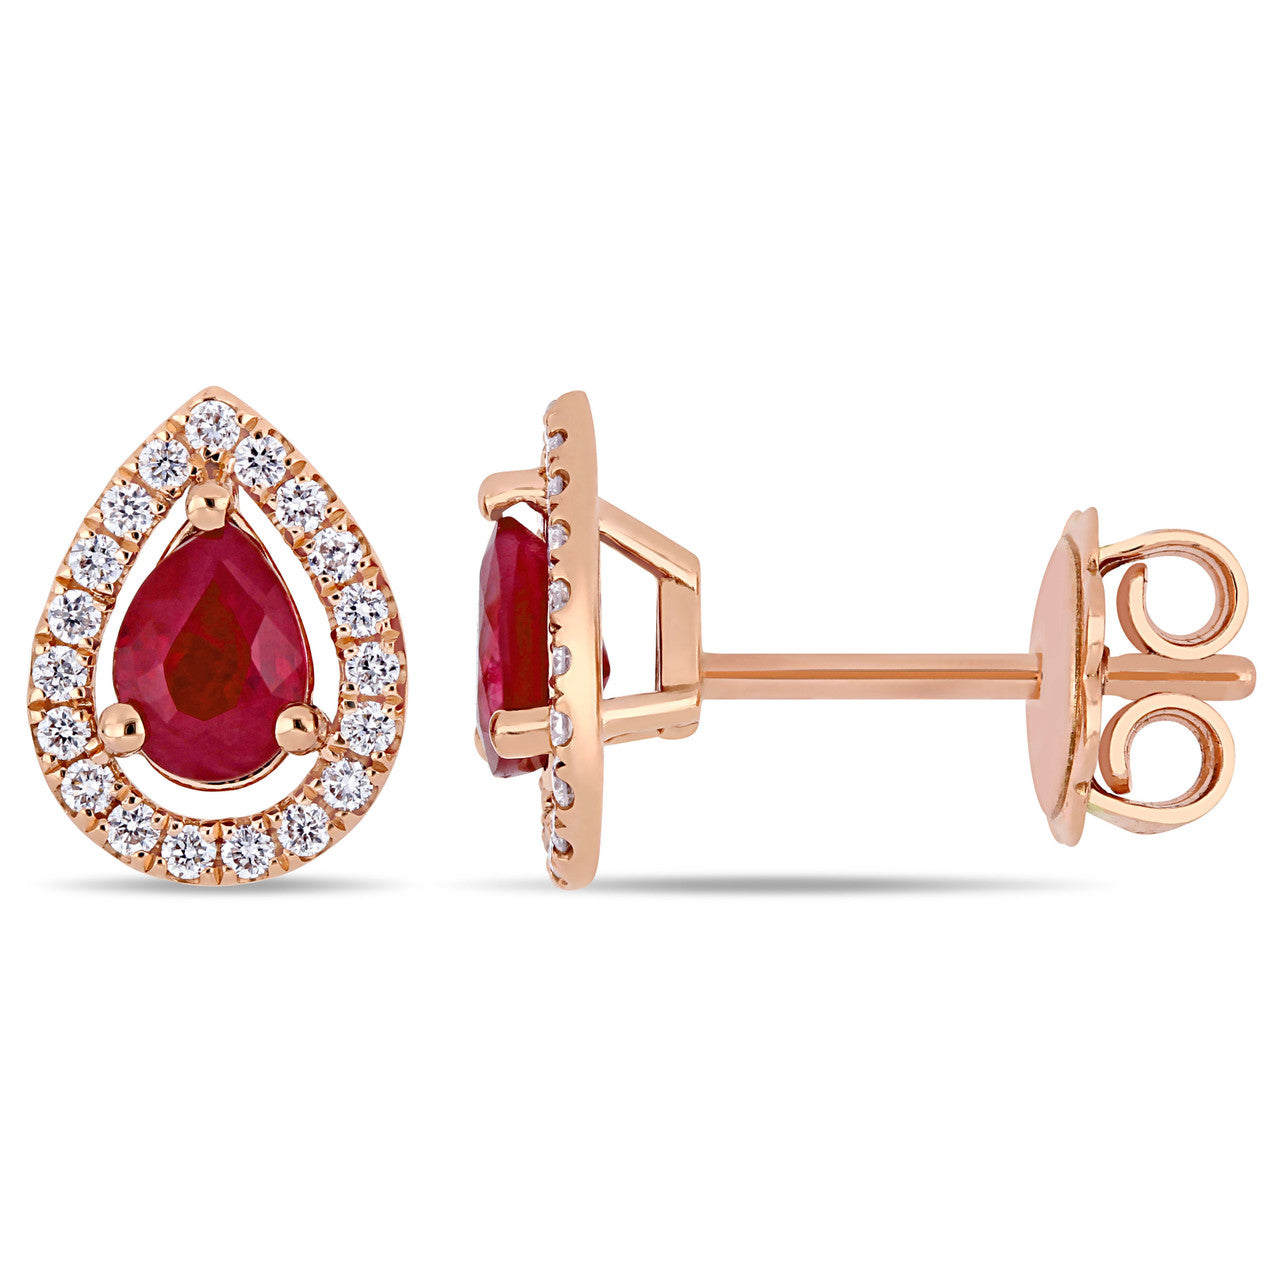 Ice Jewellery 1/5 CT Diamond TW and 7/8 CT TGW Ruby Post Earrings in 14k Gold Pink - 75000004928 | Ice Jewellery Australia